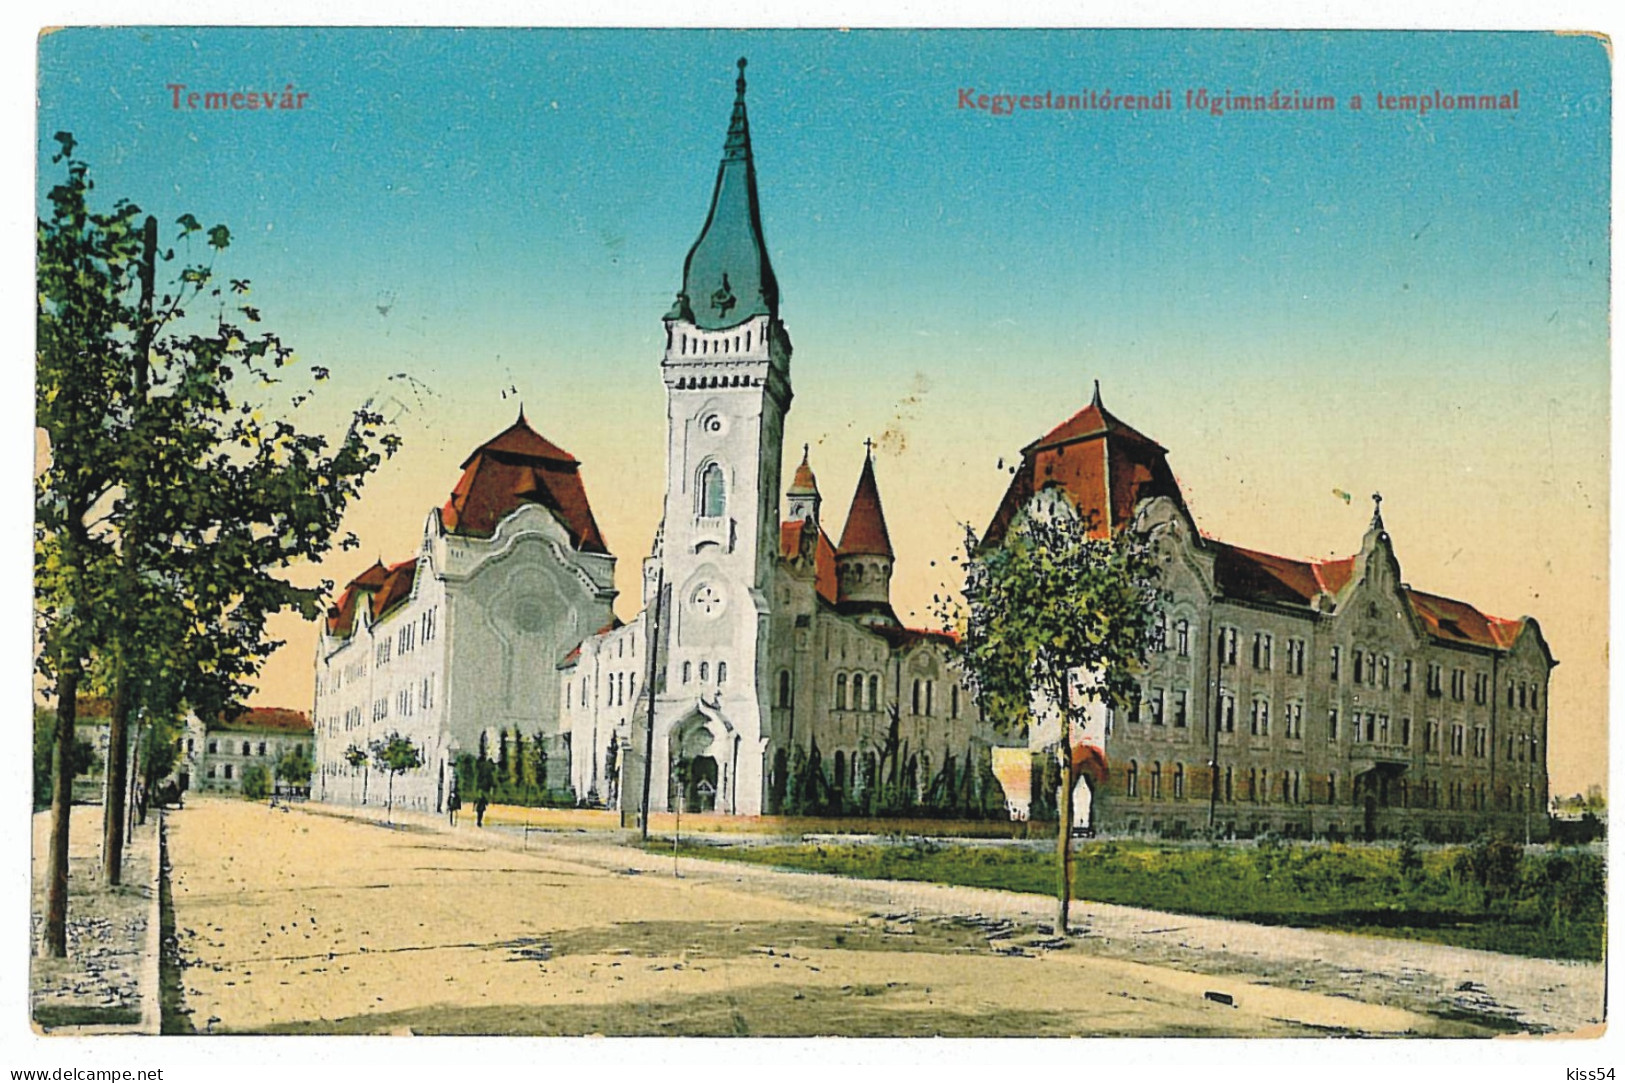 RO 54 - 111 TIMISOARA, Gymnasium Order, Romania - Old Postcard - Used - 1913 - Roumanie